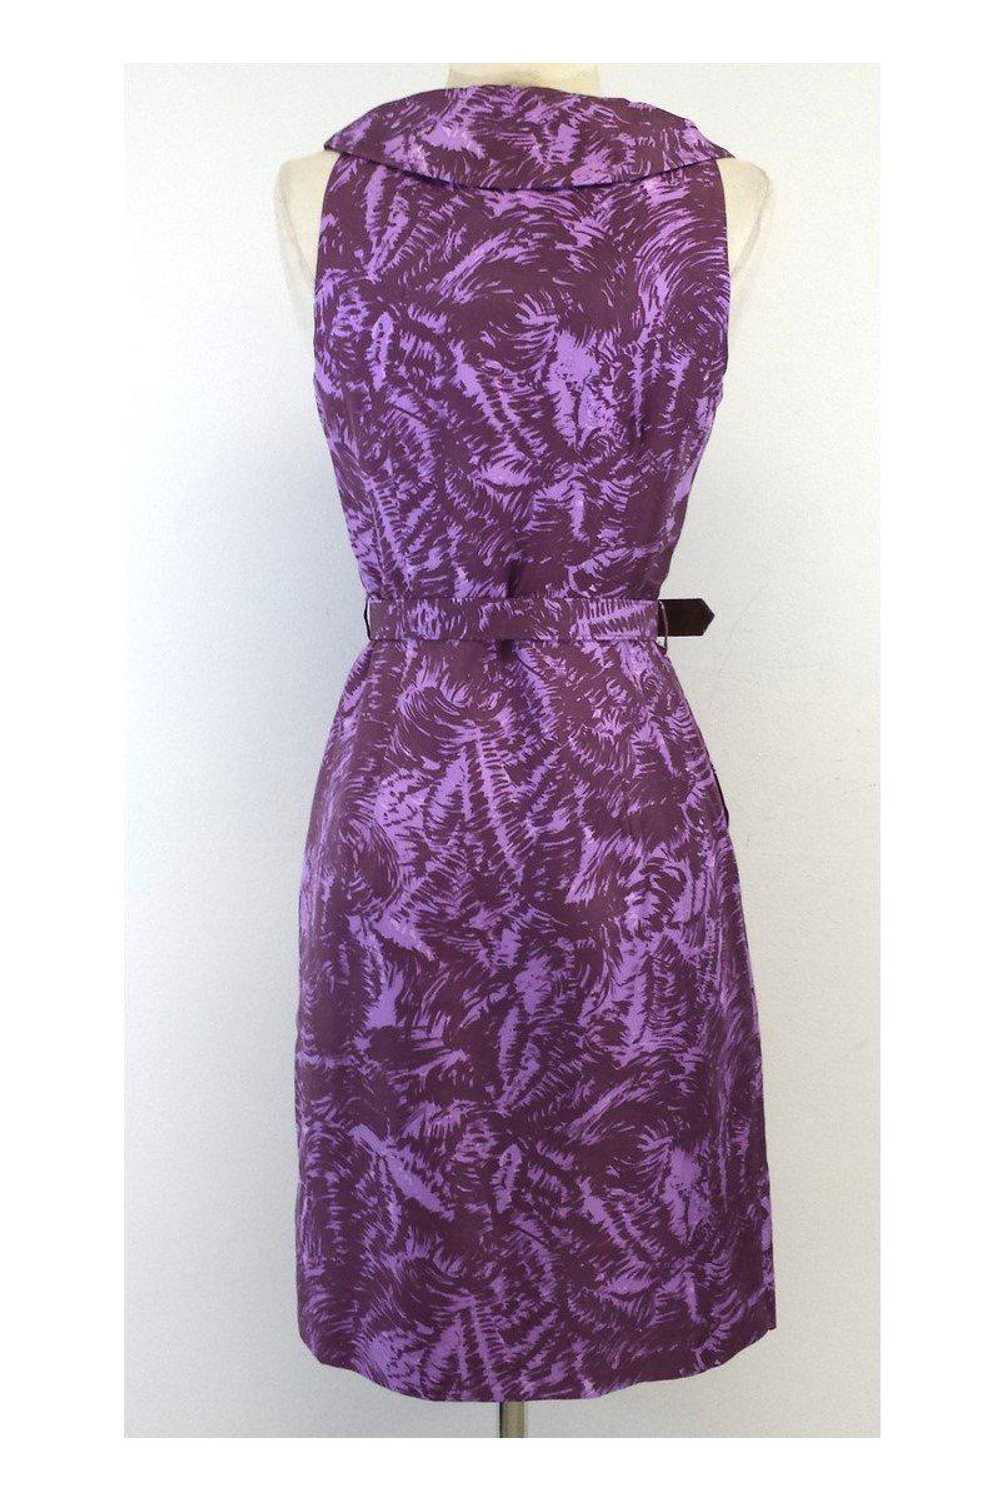 Milly - Purple Print Silk Sleeveless Dress Sz 2 - image 3